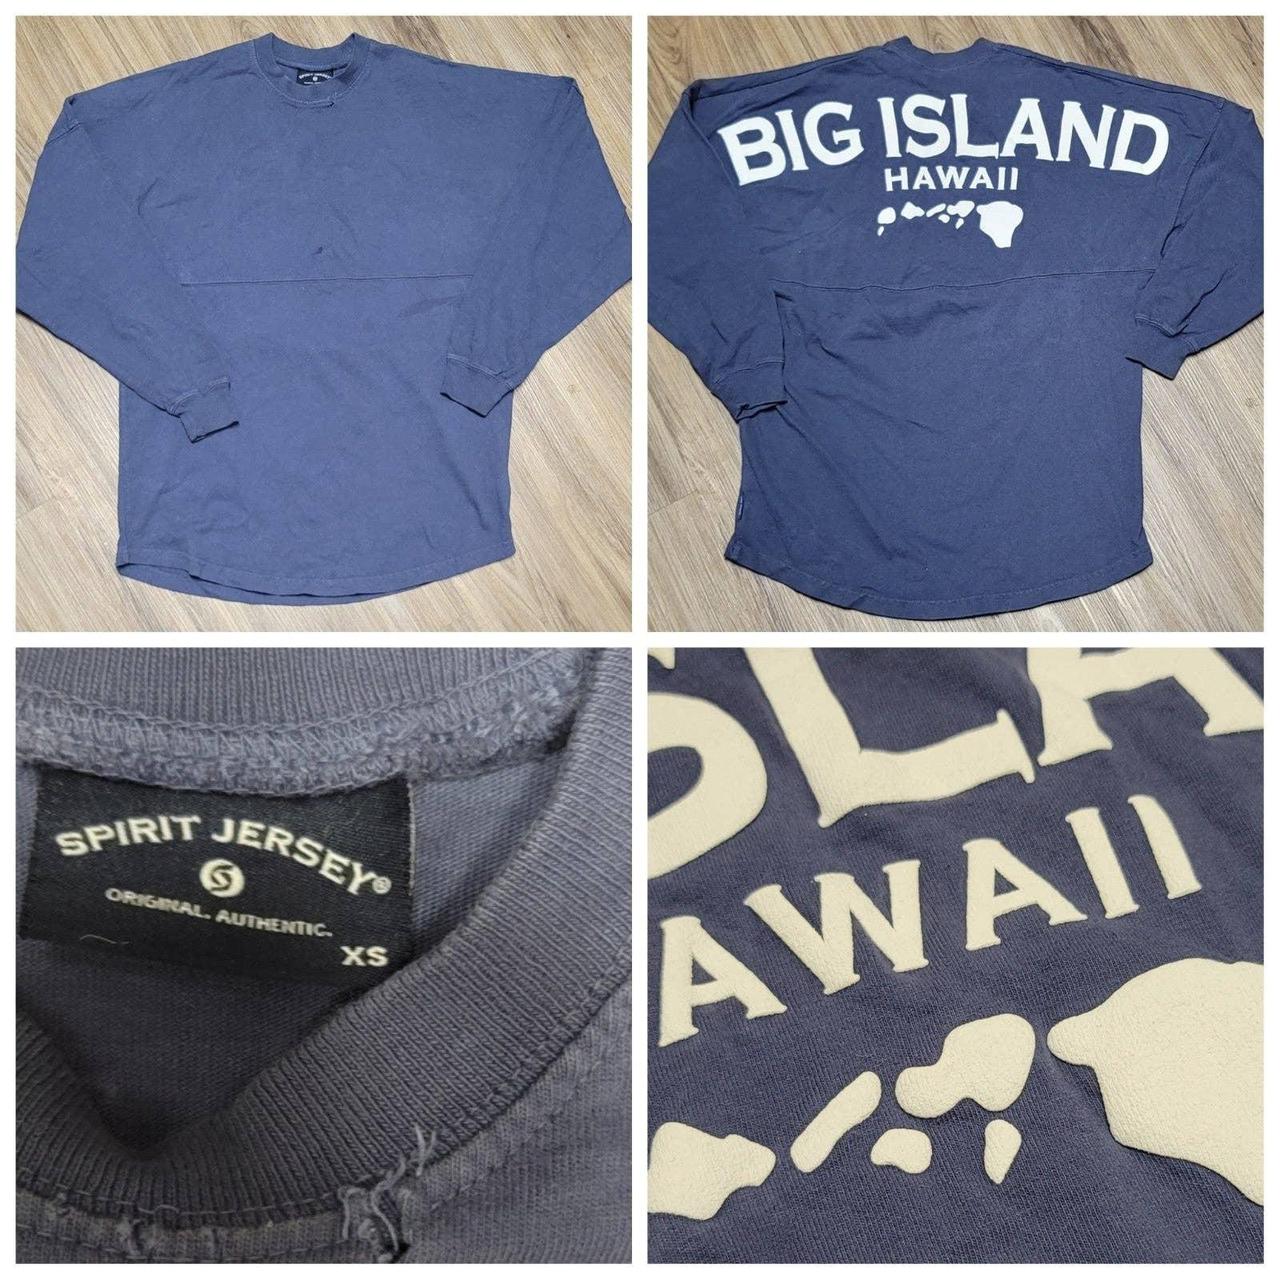 Vintage oversized Hawaiian shirt with long sleeves. - Depop